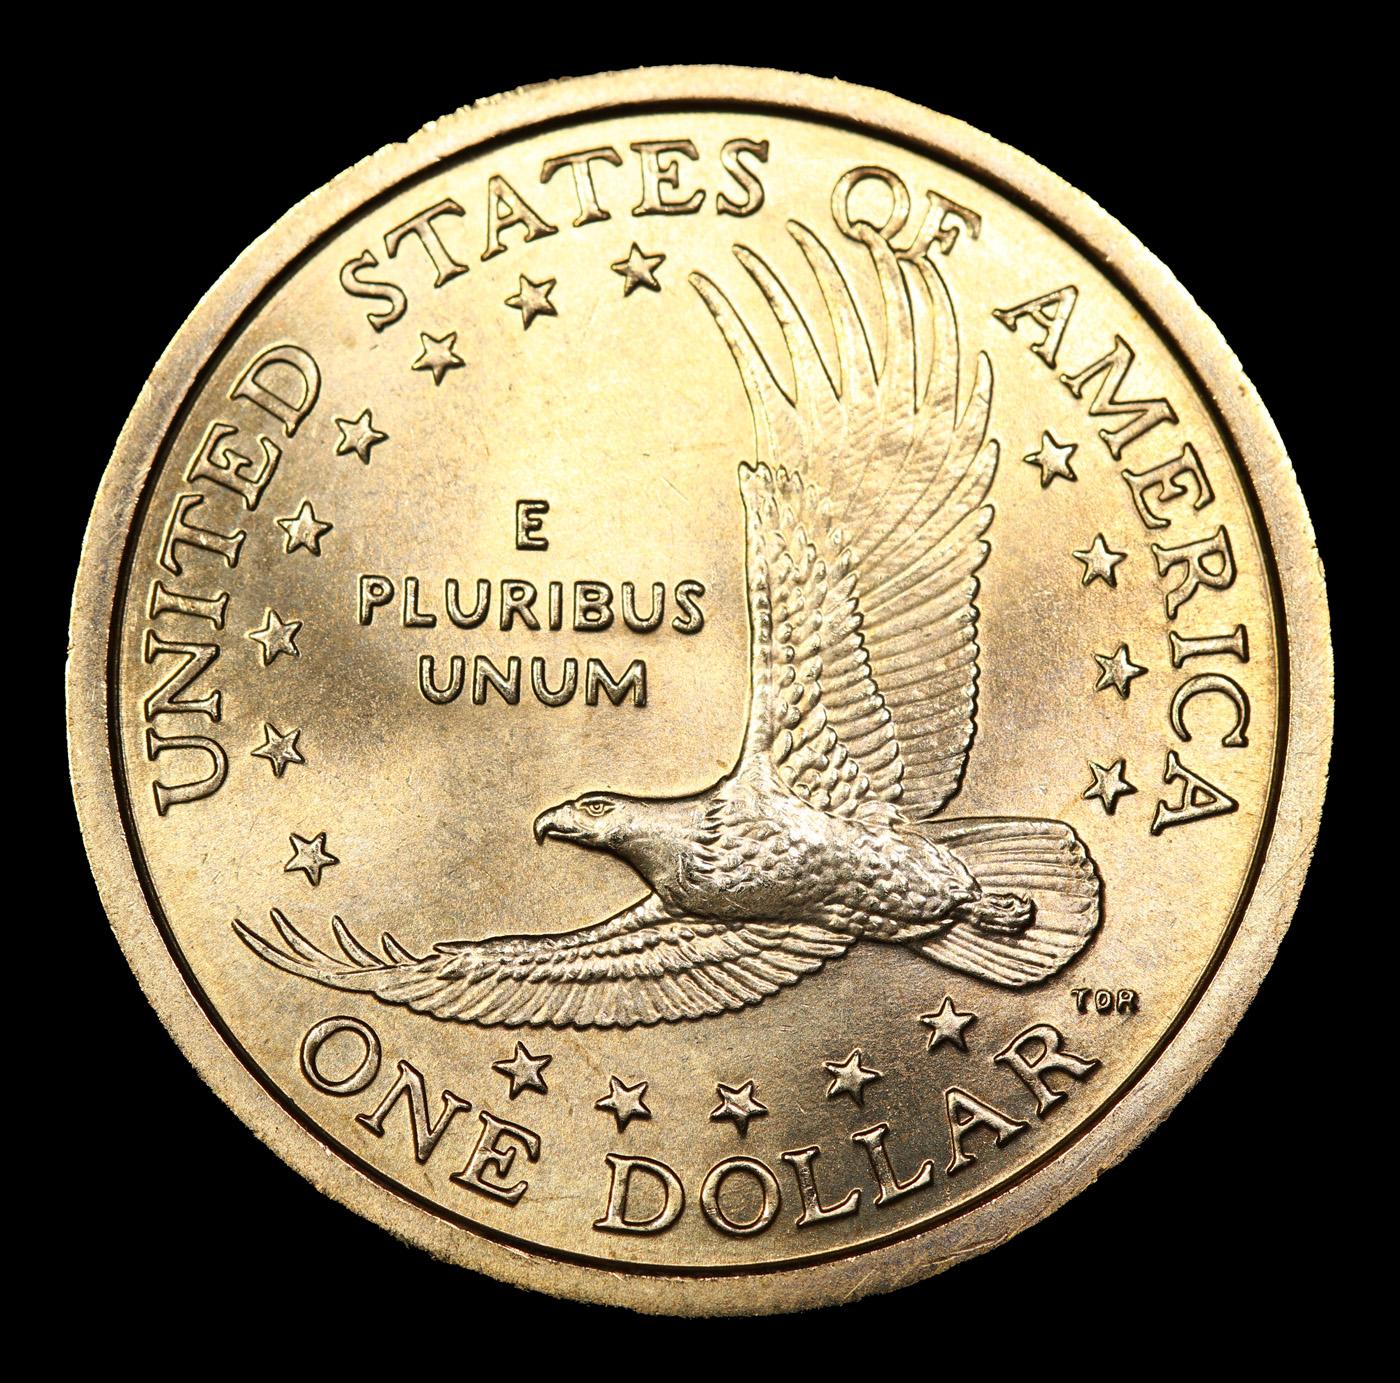 2003-d Sacagawea Dollar $1 Grades GEM++ Unc